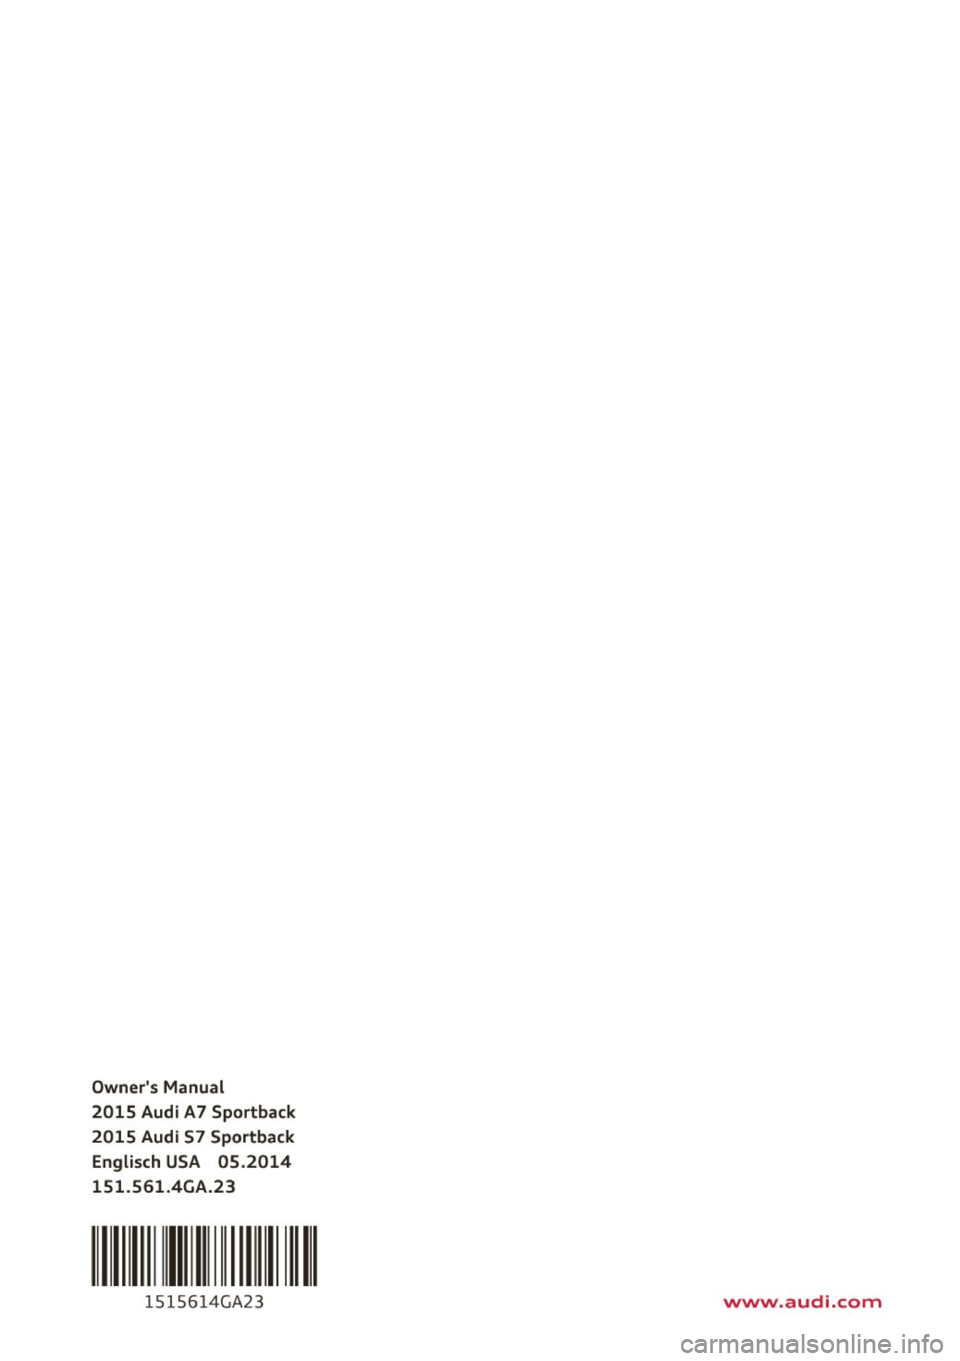 AUDI A7 2015  Owners Manual Owners  Manual 
2015  Audi  A7  Sportback 
2015  Audi  57  Sportback Englisch  USA  05 .2014 
151.561 .4GA.23 
111  111  111 I 
1 51 56 14 G A23 www.audi.com  